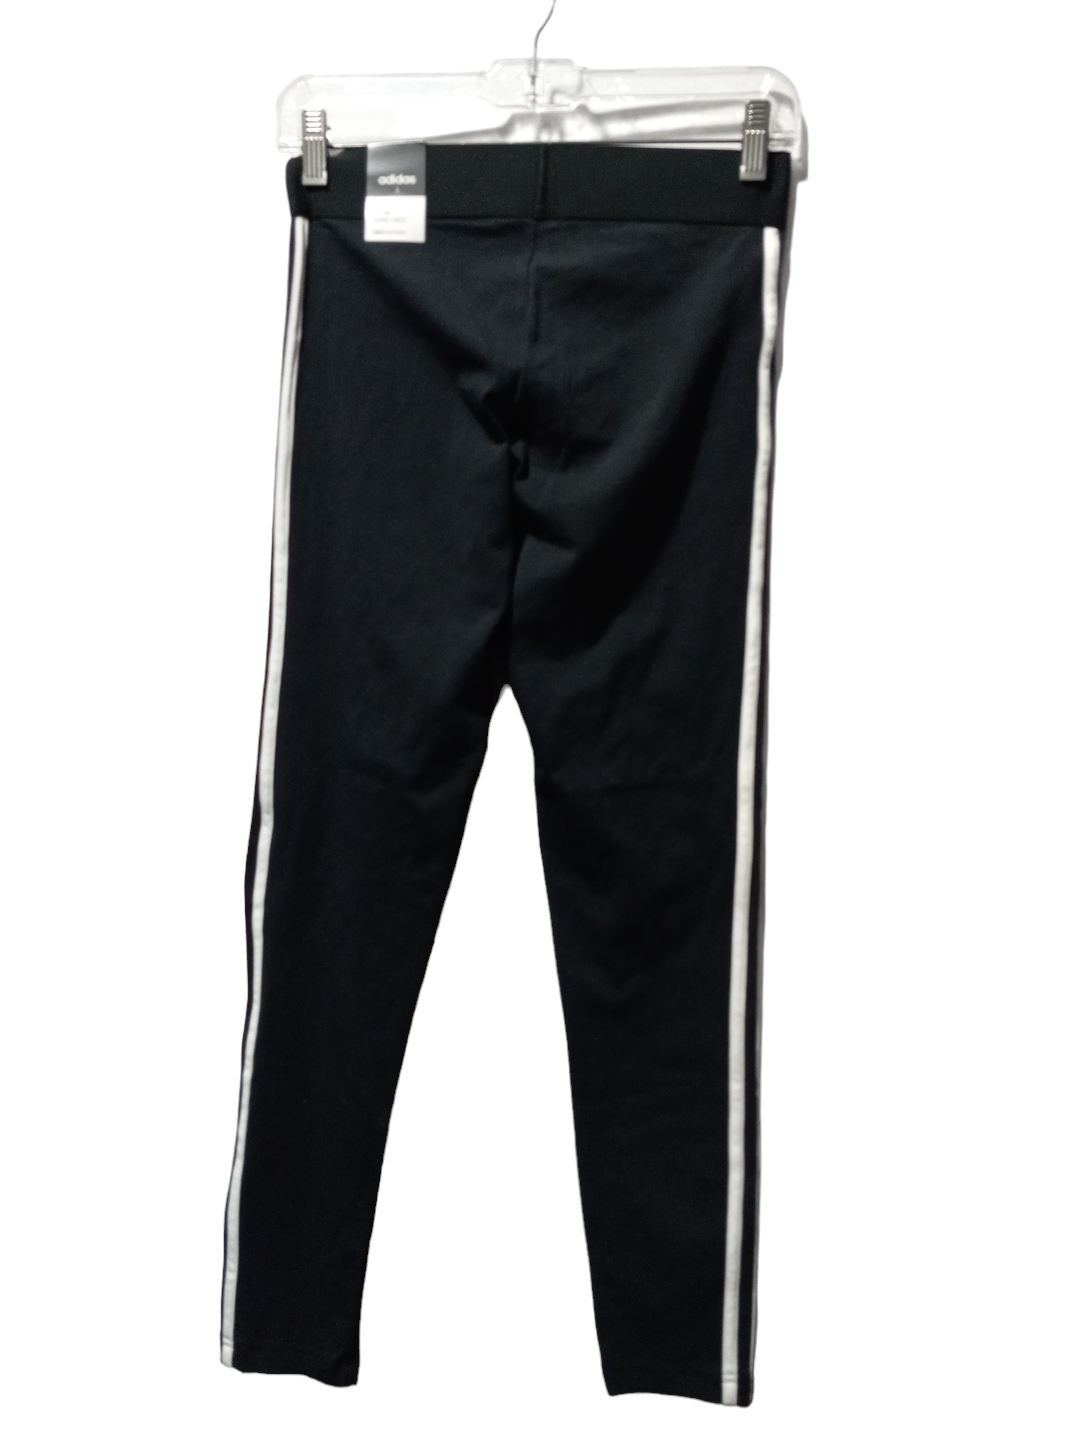 Black & White Pants Leggings Adidas, Size S